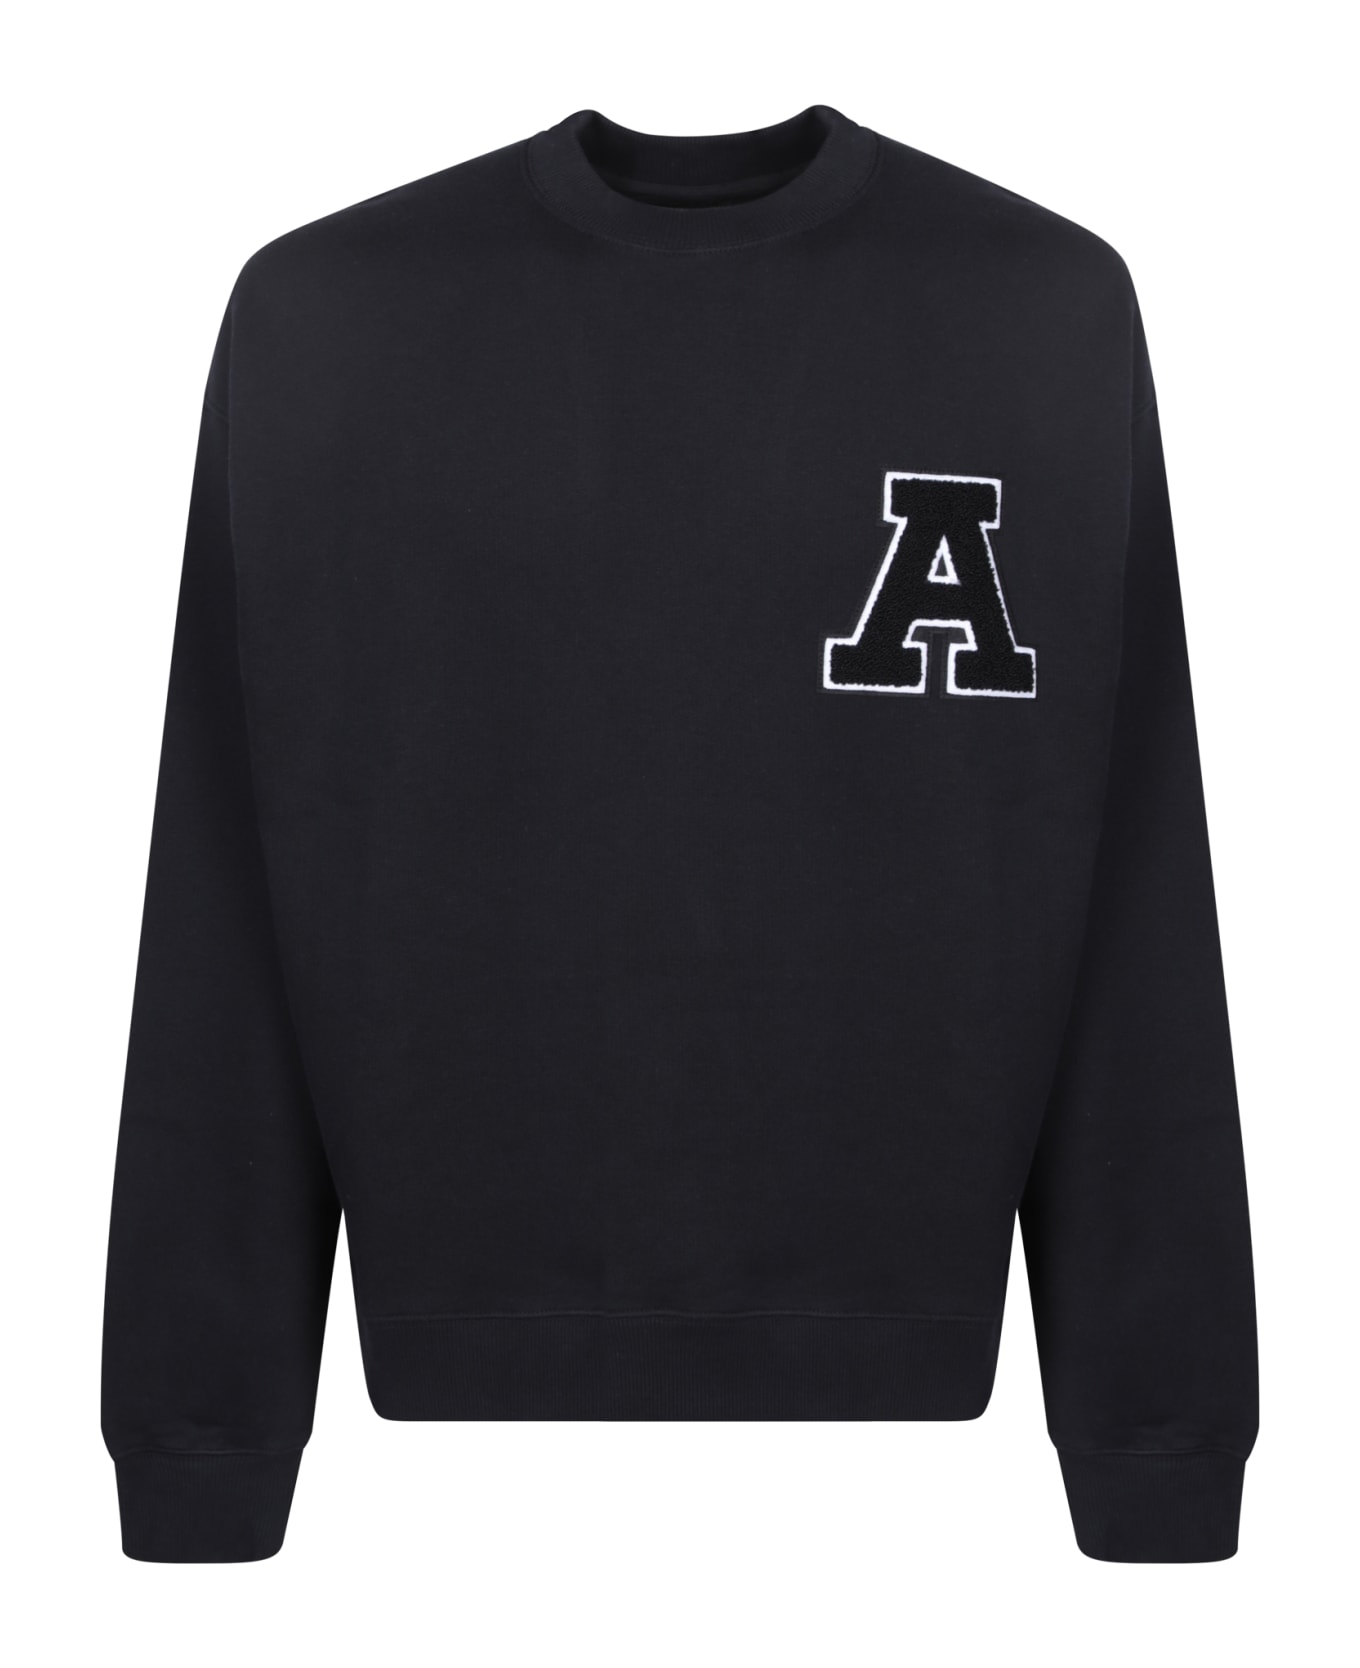 Axel Arigato Team Black Sweatshirt - Black